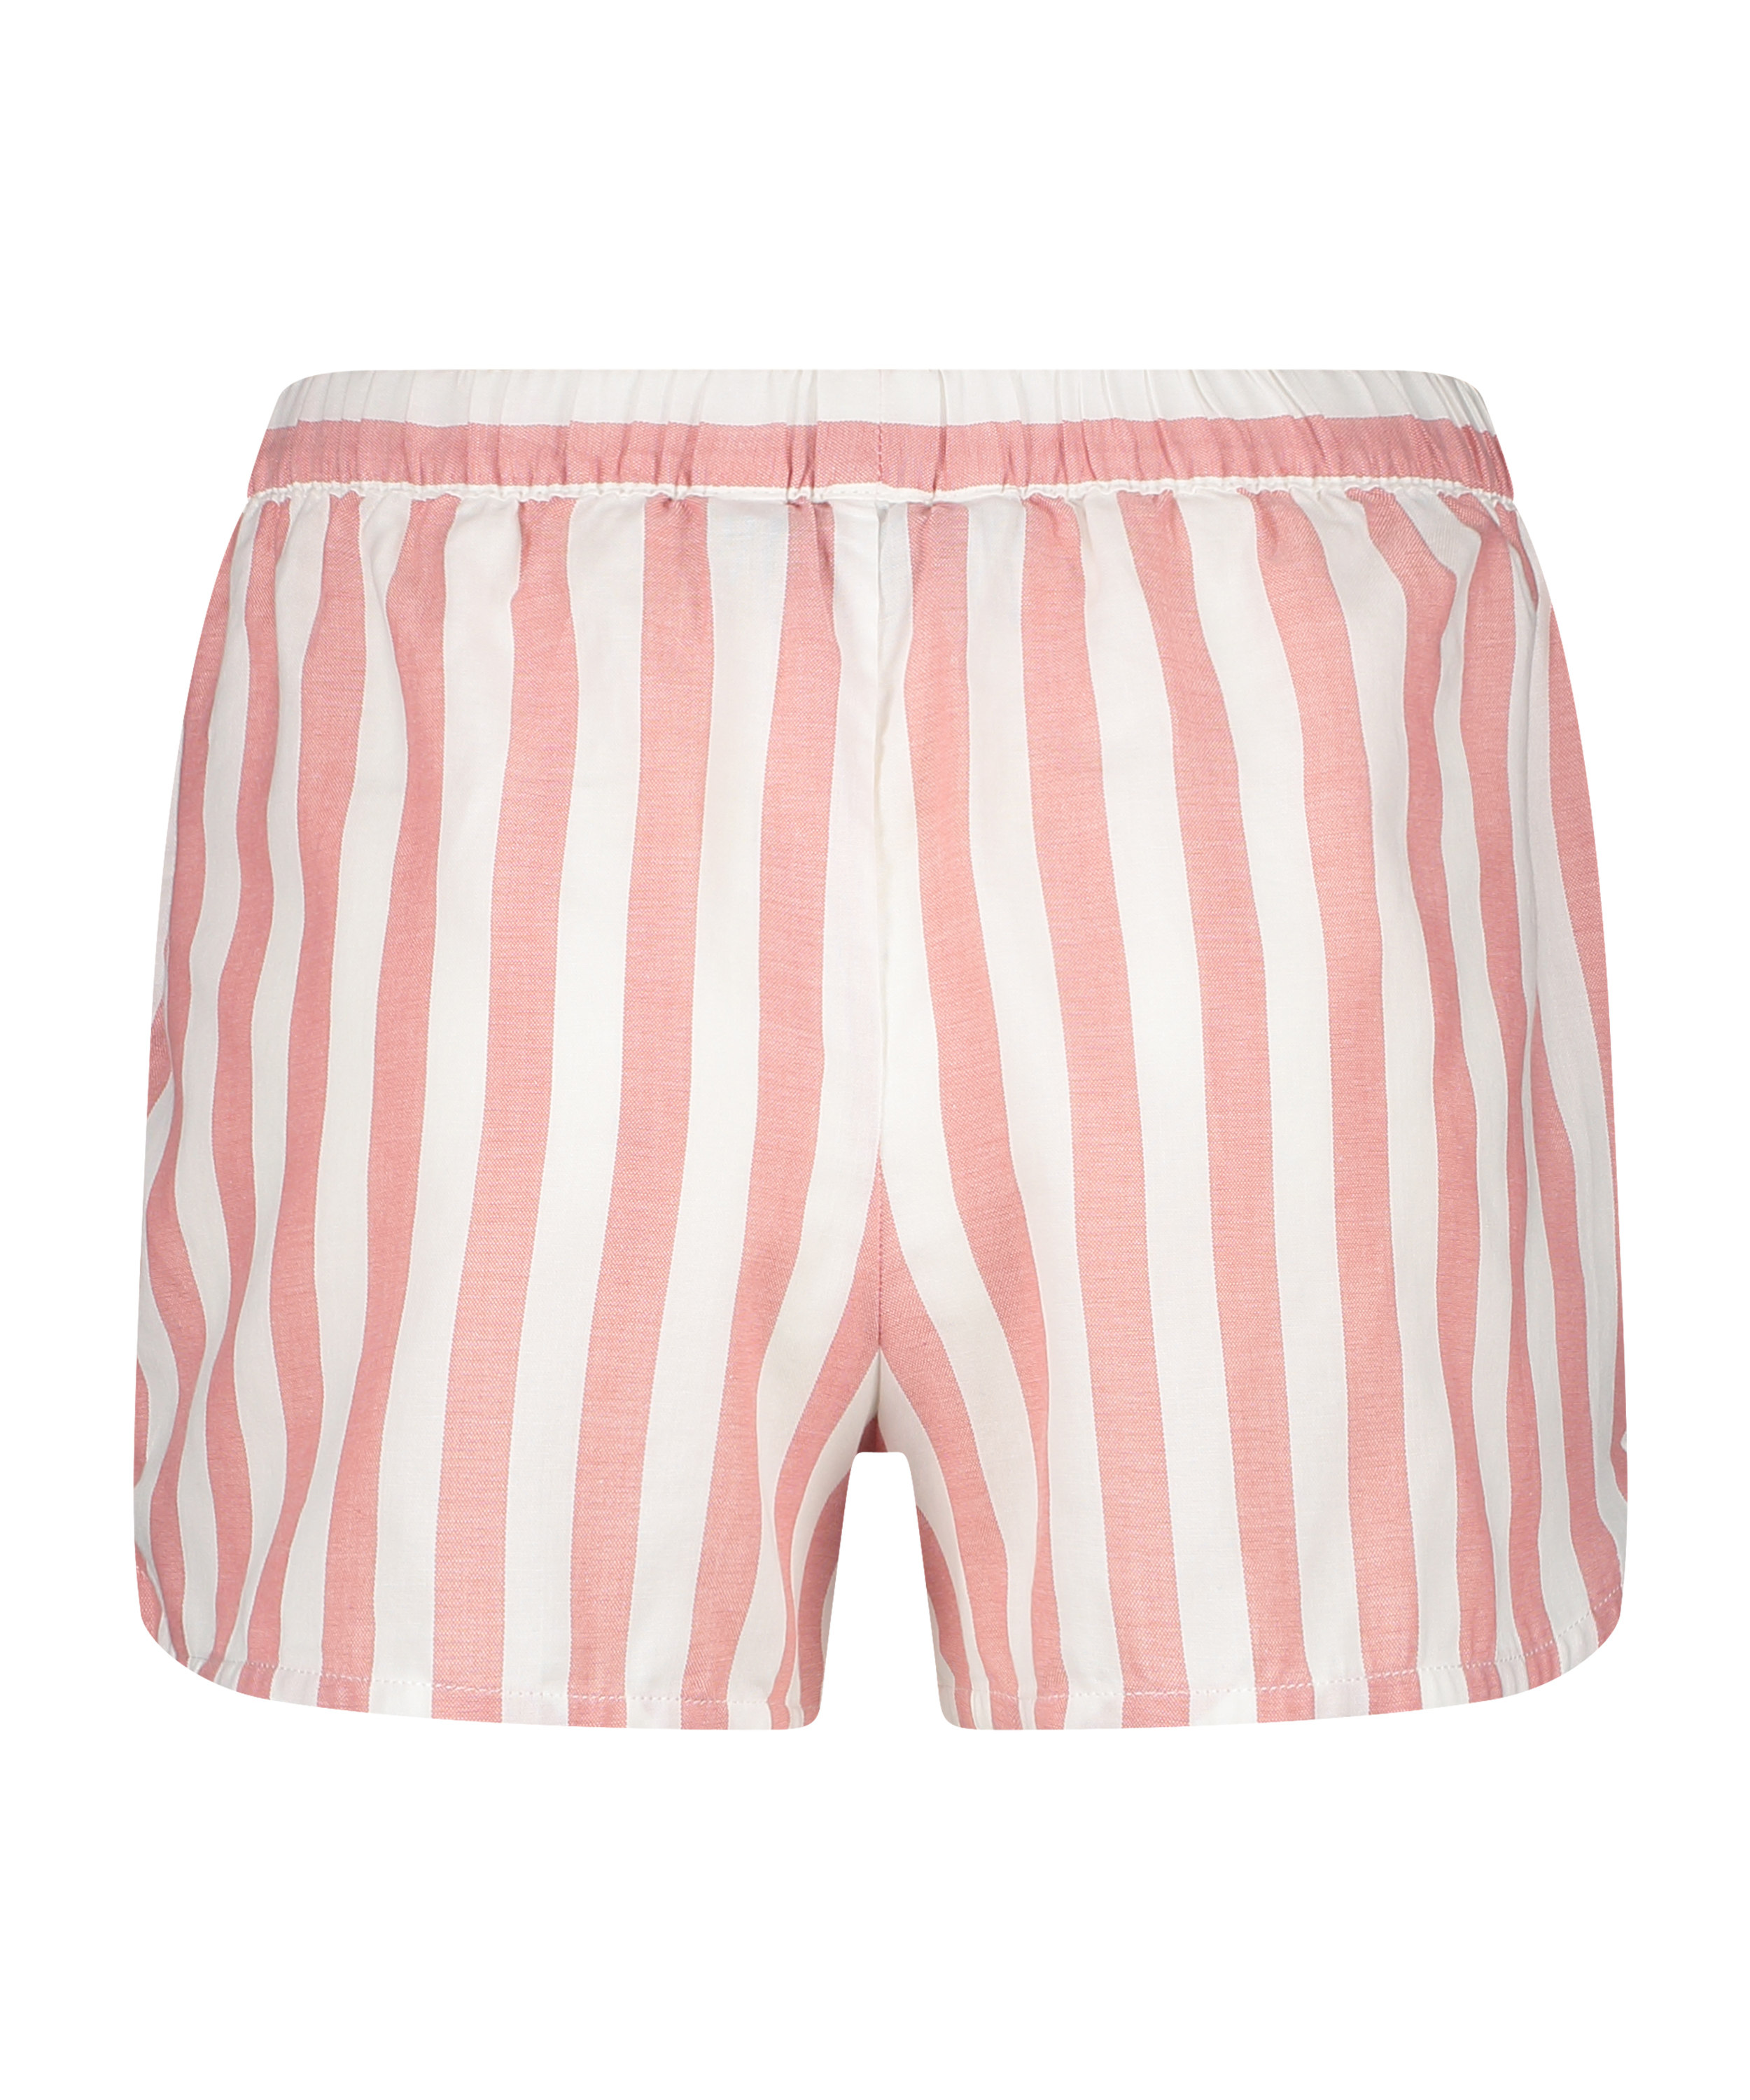 Chambray Stripe Shorts, Pink, main